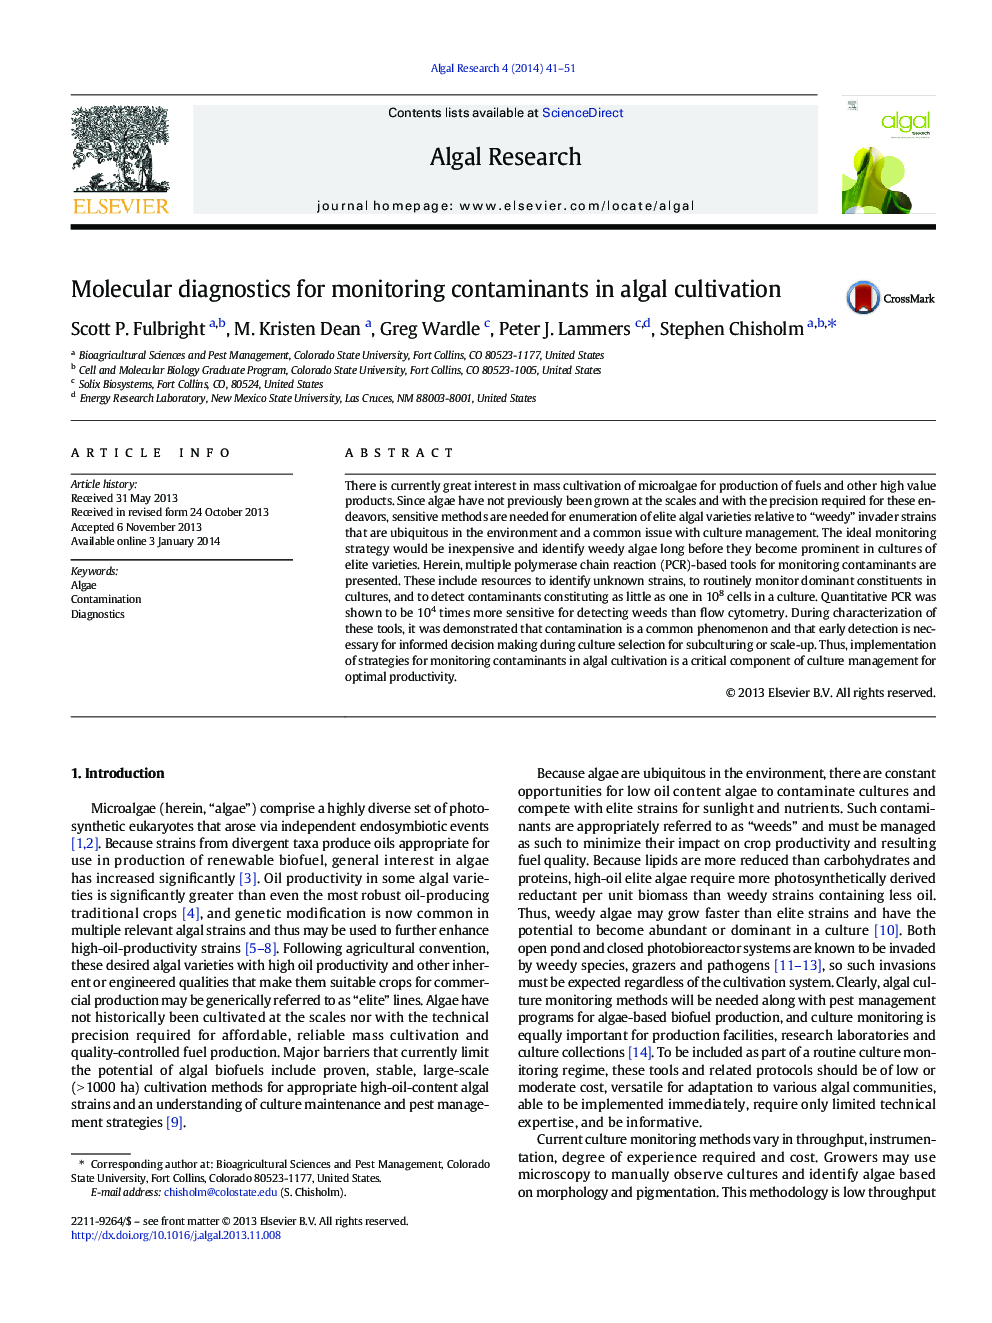 Molecular diagnostics for monitoring contaminants in algal cultivation